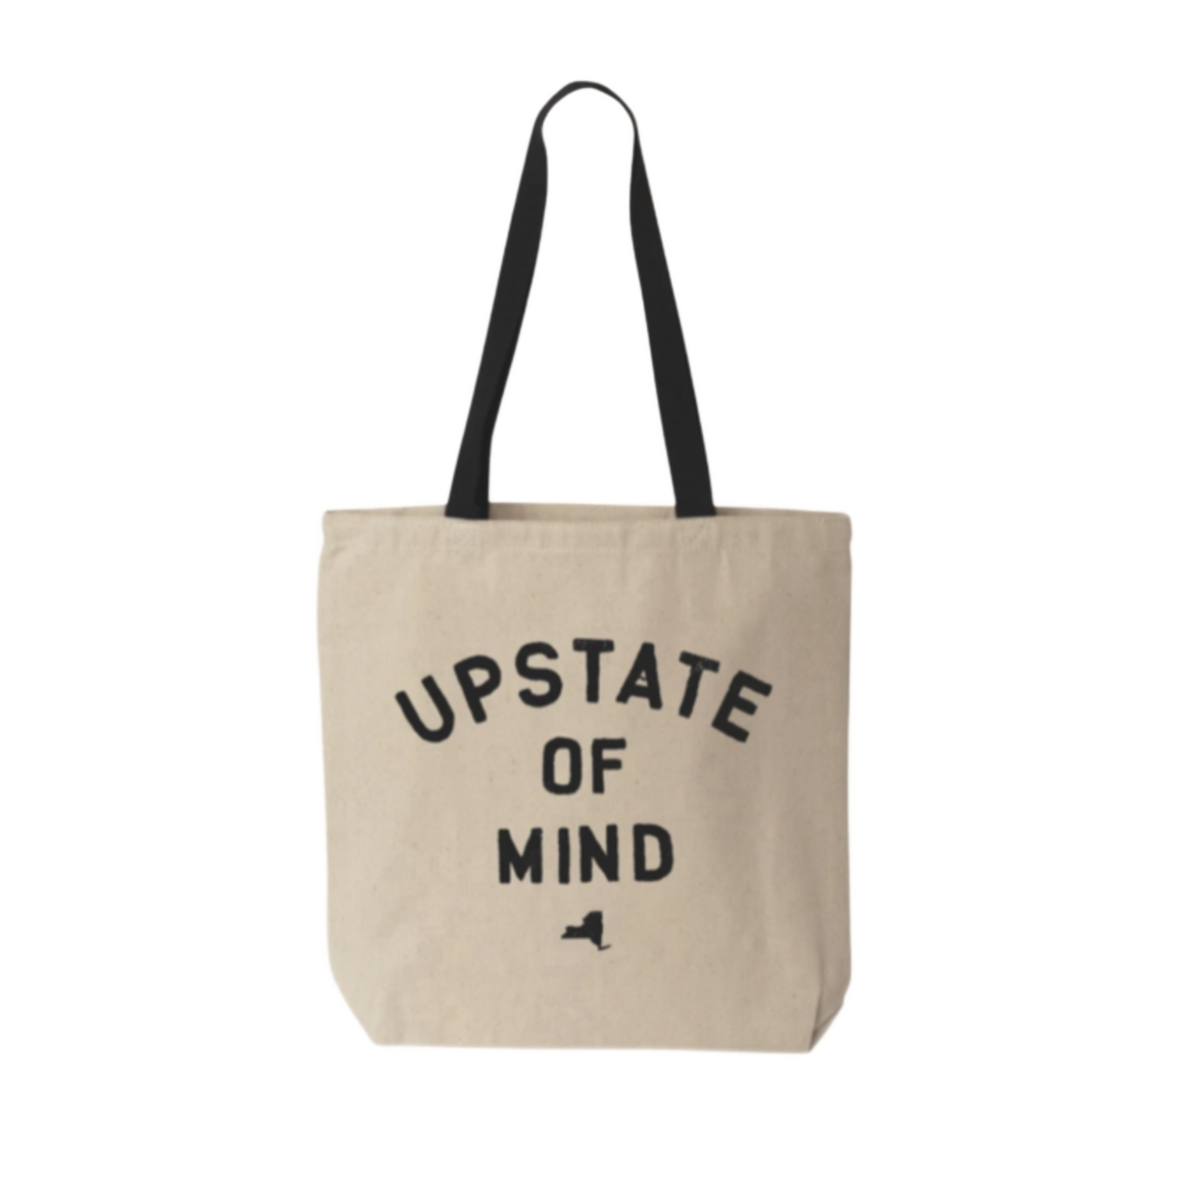 Upstate of Mind Tote Bag